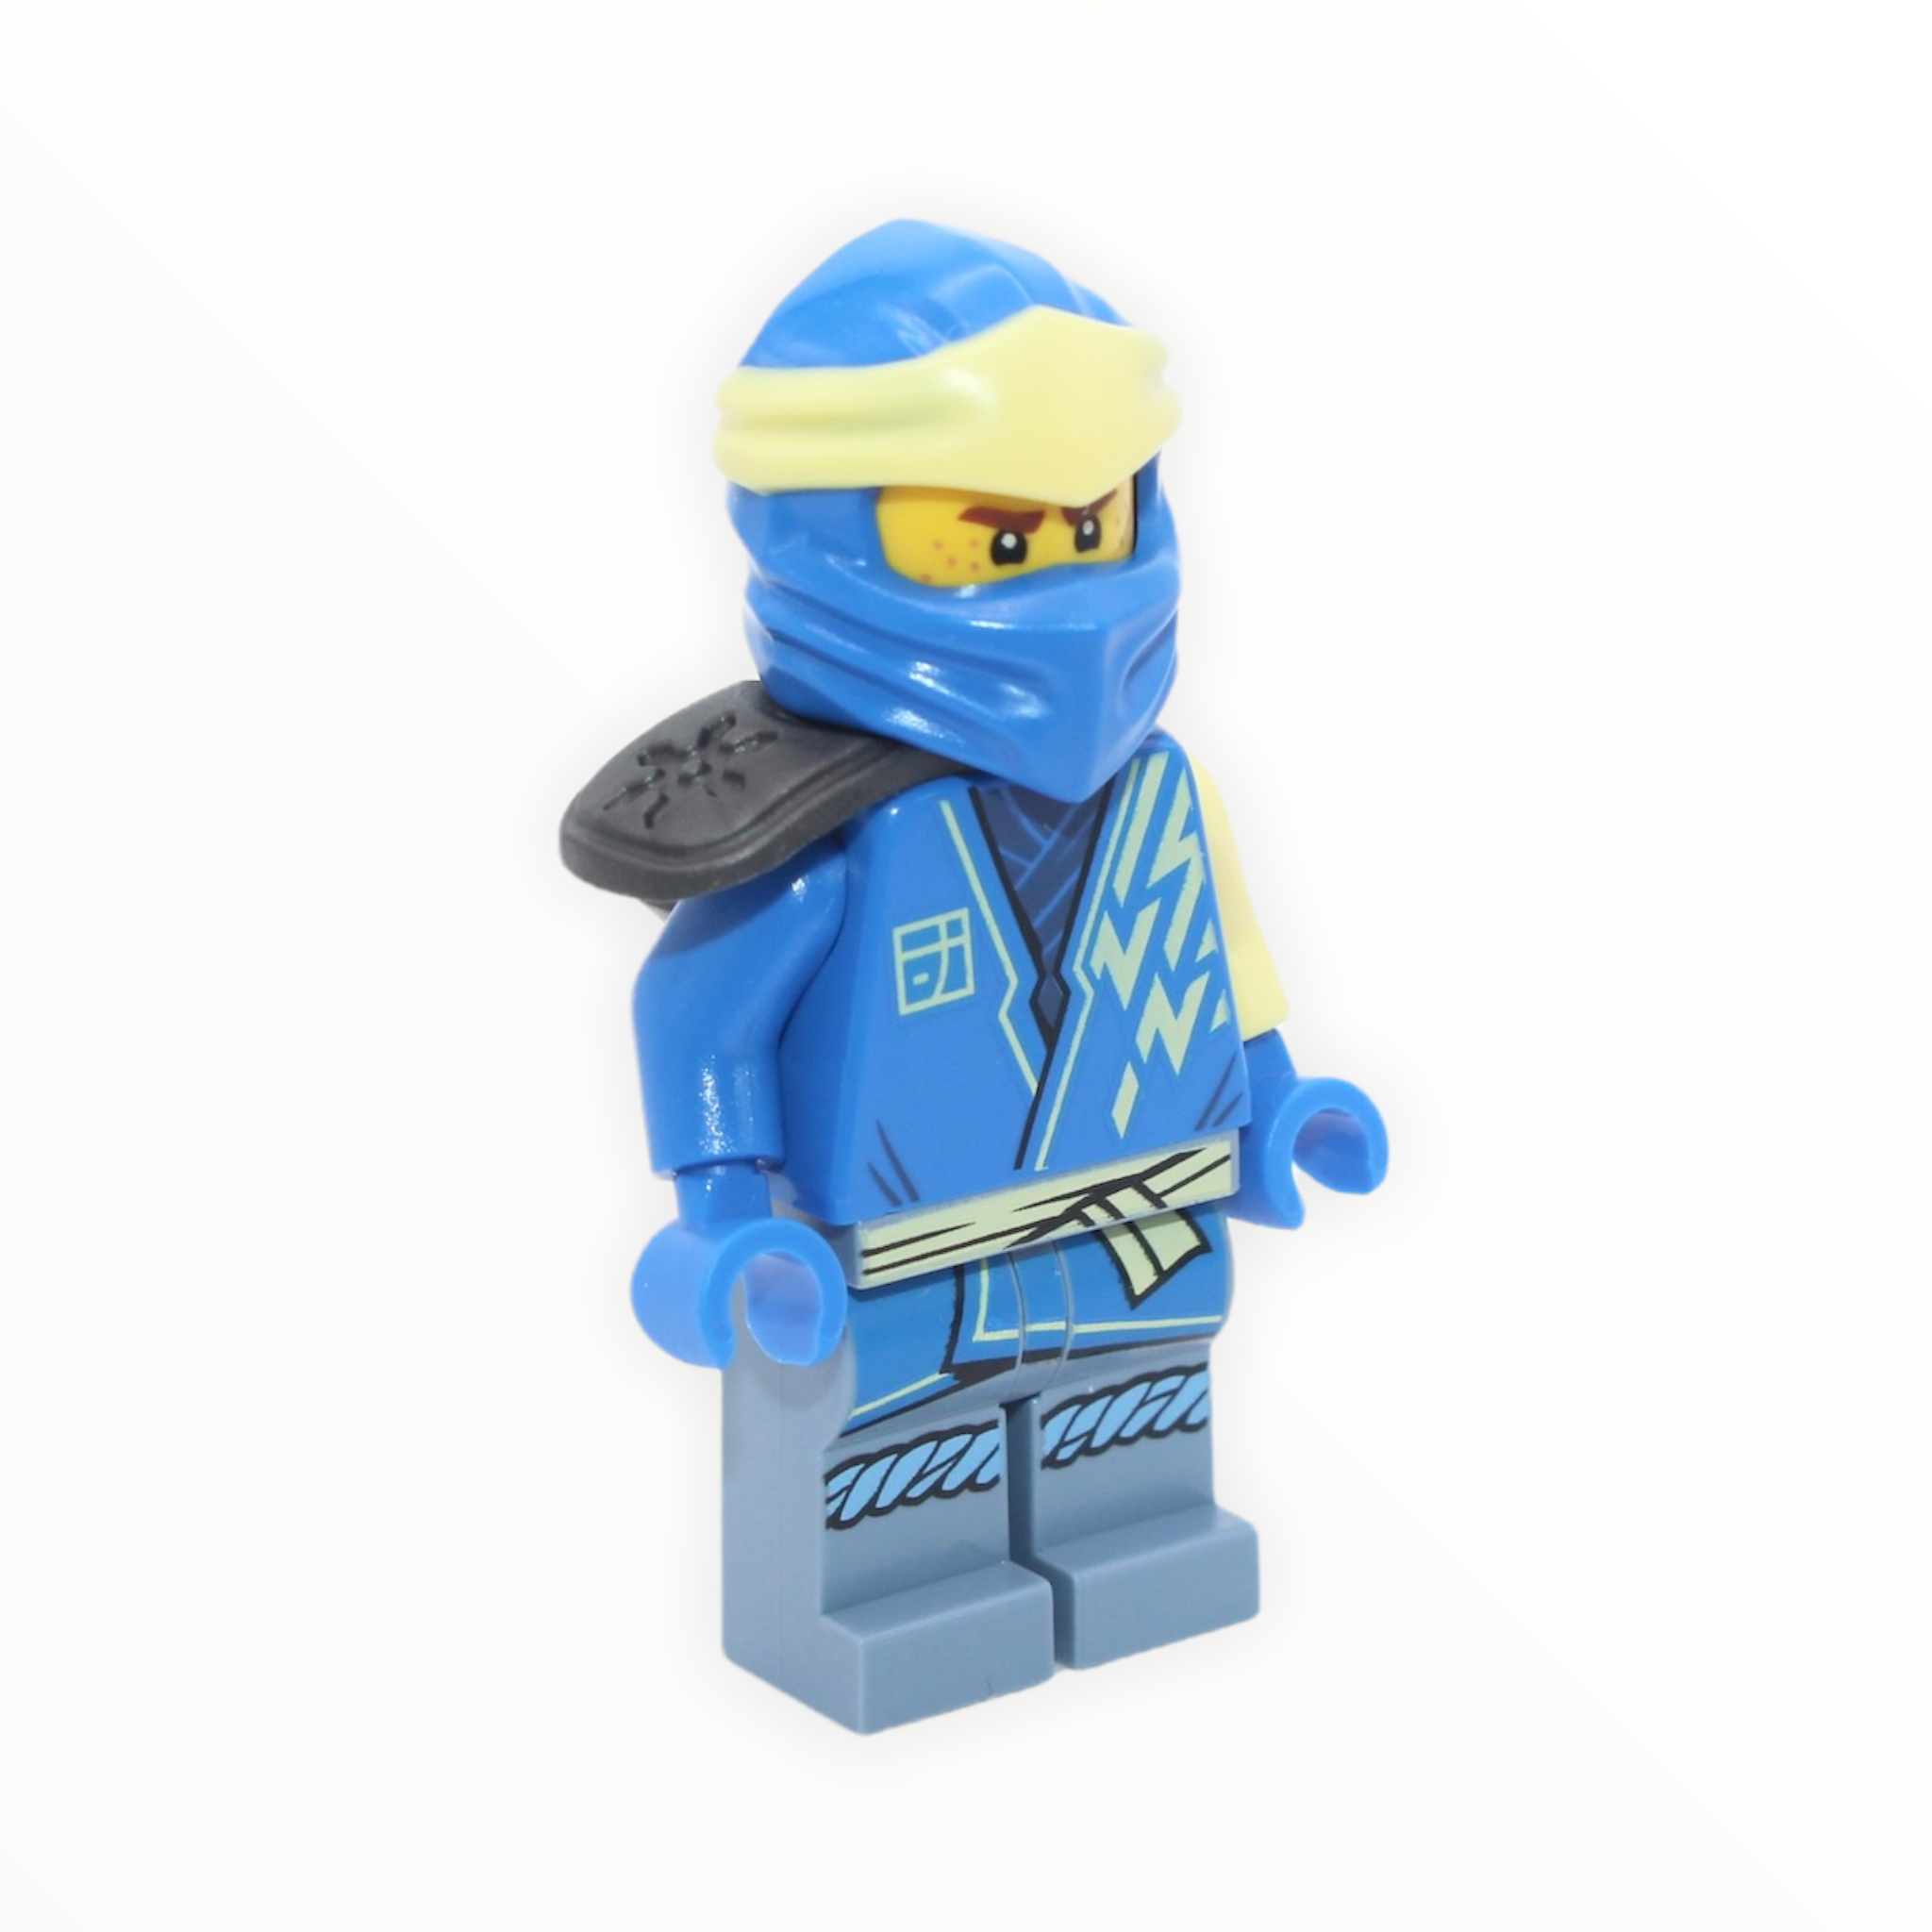 LEGO Ninjago Legacy Minifigure - ninja Cole, black robe & mask